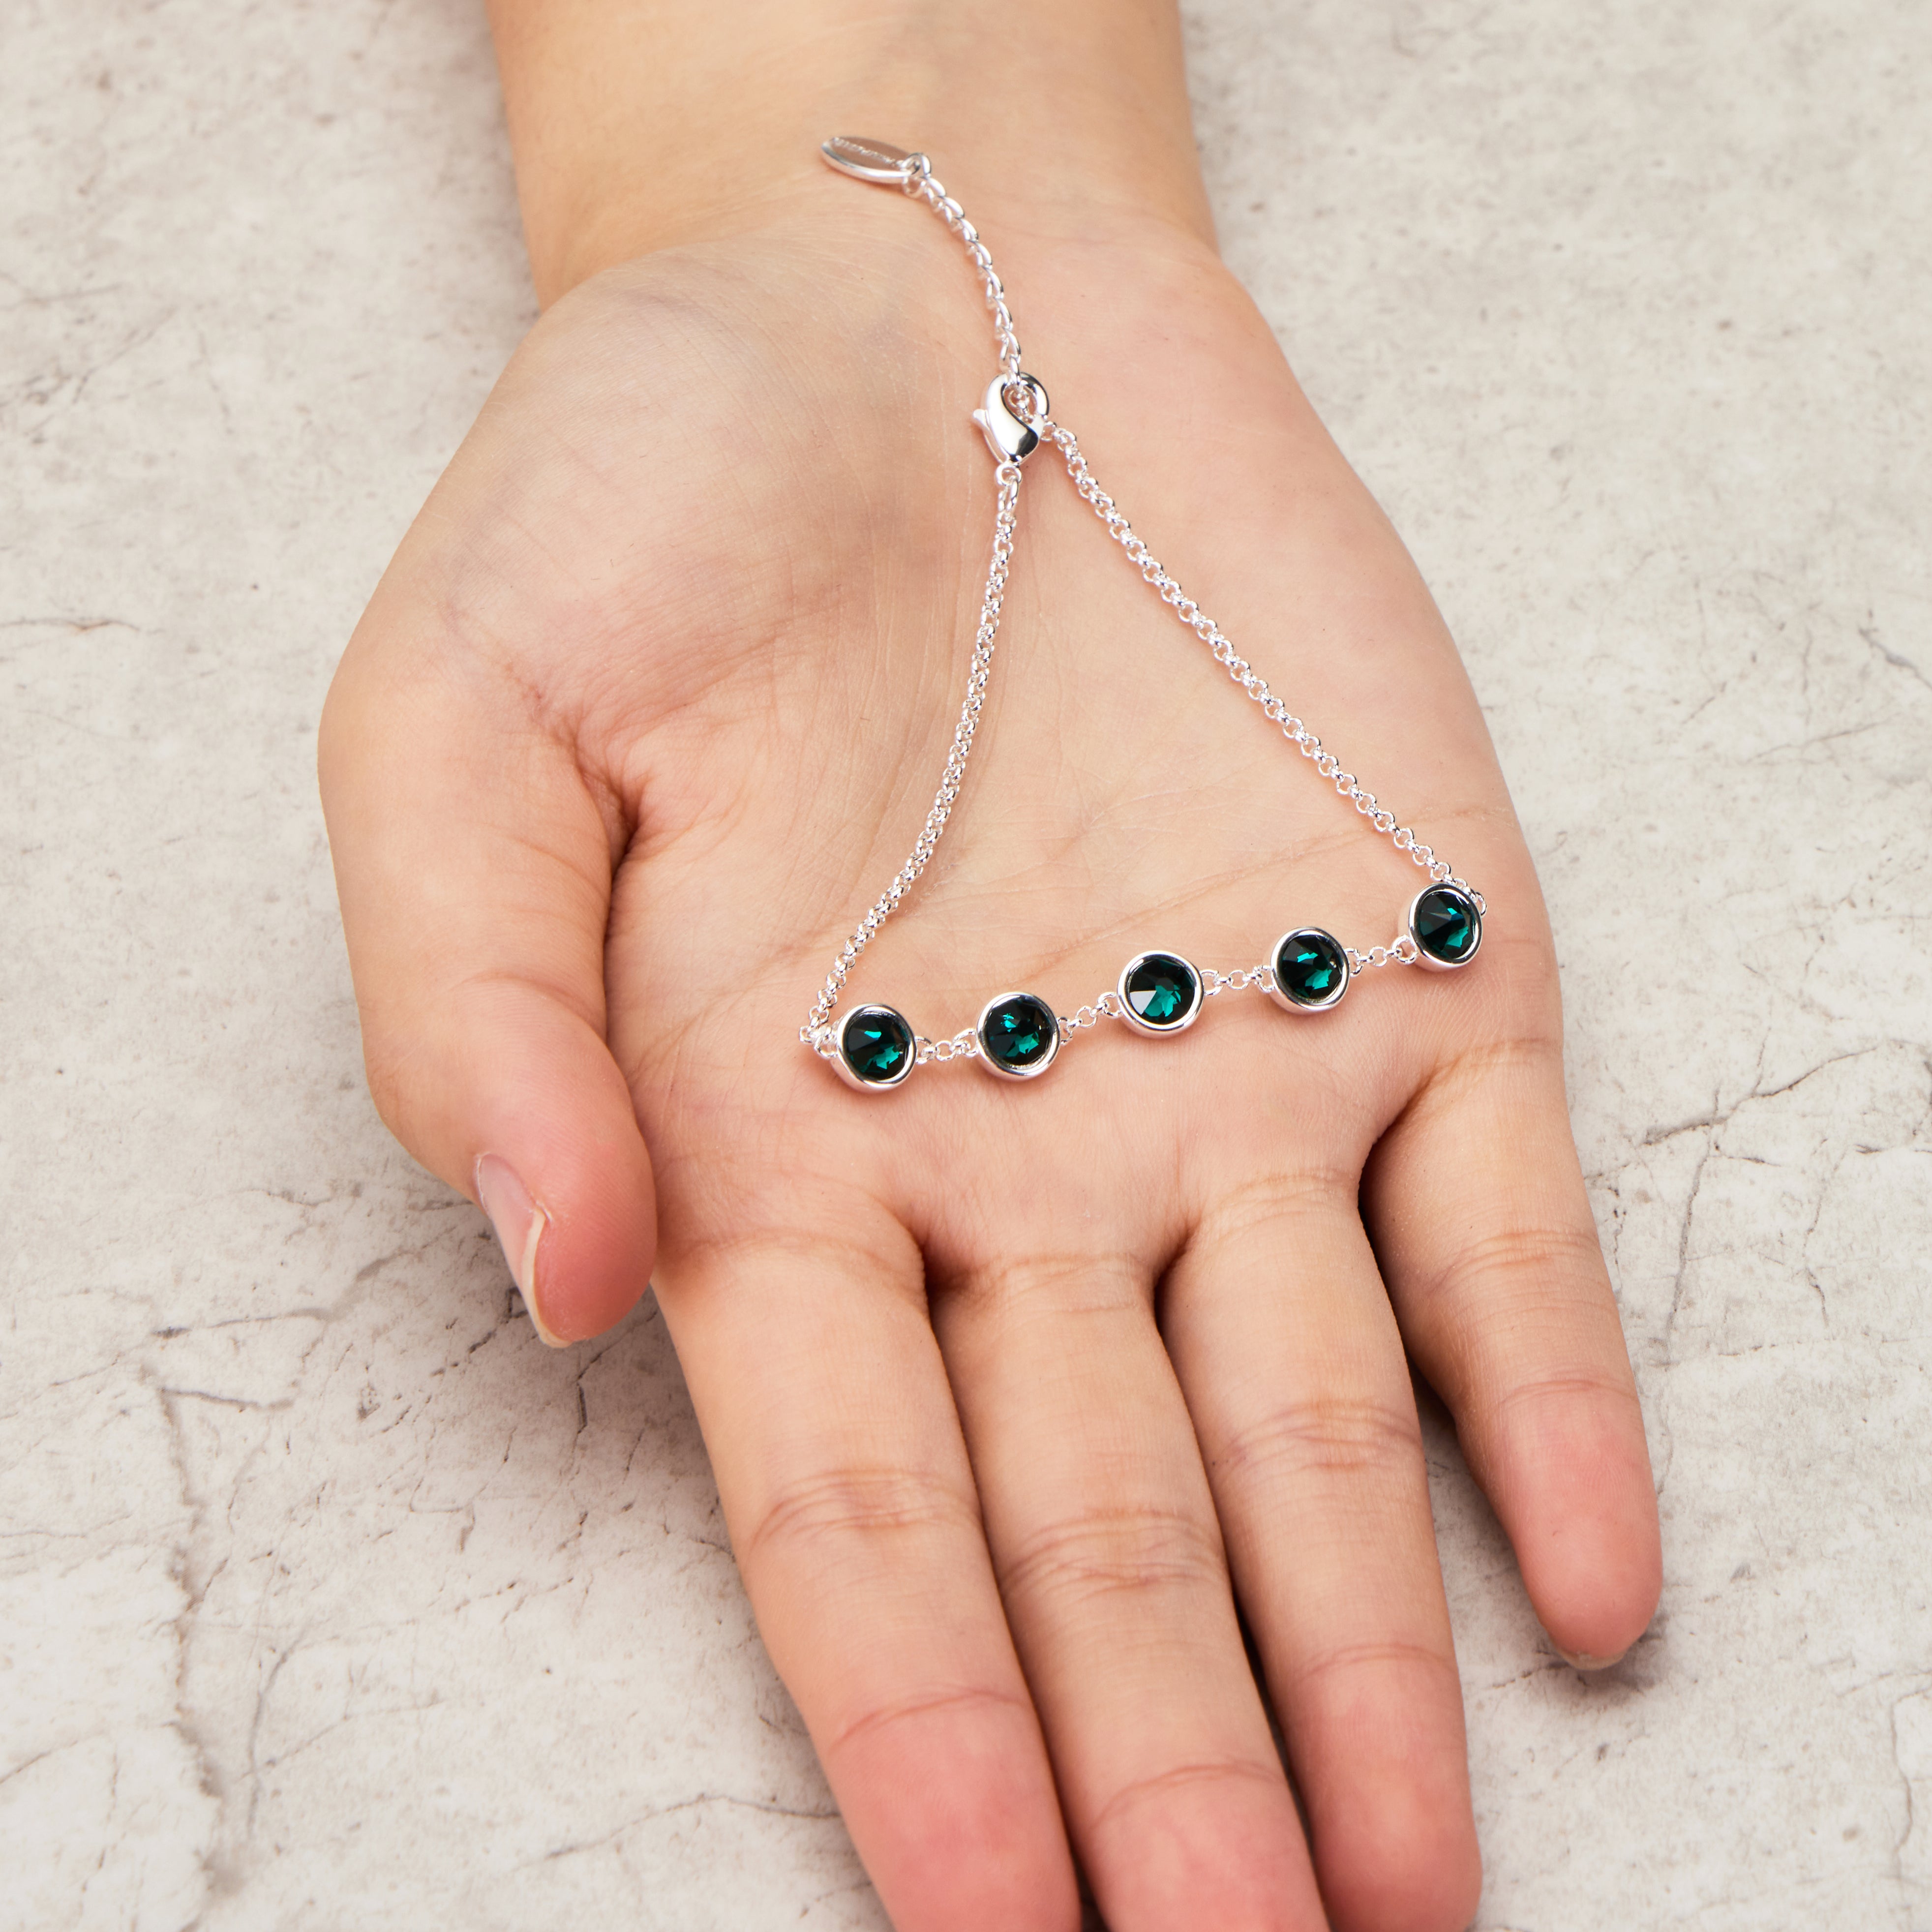 May Birthstone Bracelet Created with Emerald Zircondia® Crystals